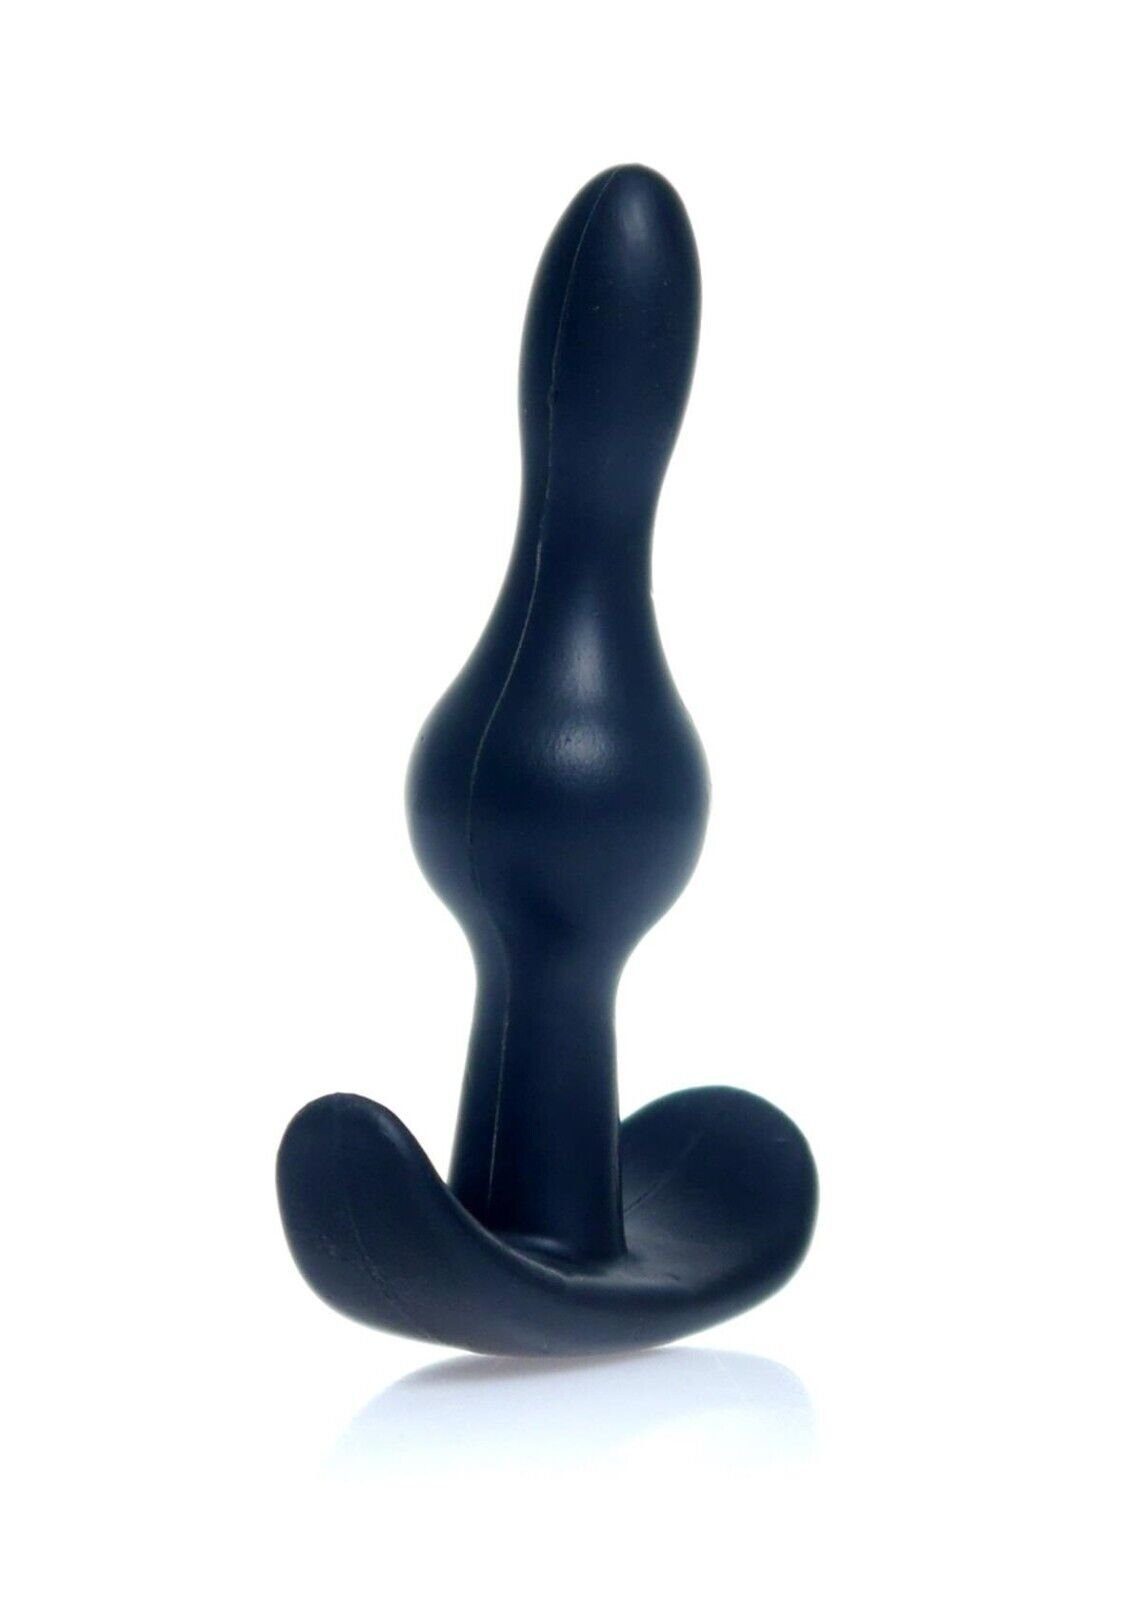 denu-shop Analplug Lang 9cm Plug Sexspielzeug Anal Stöpsel Schwarz in T-Plug Anal